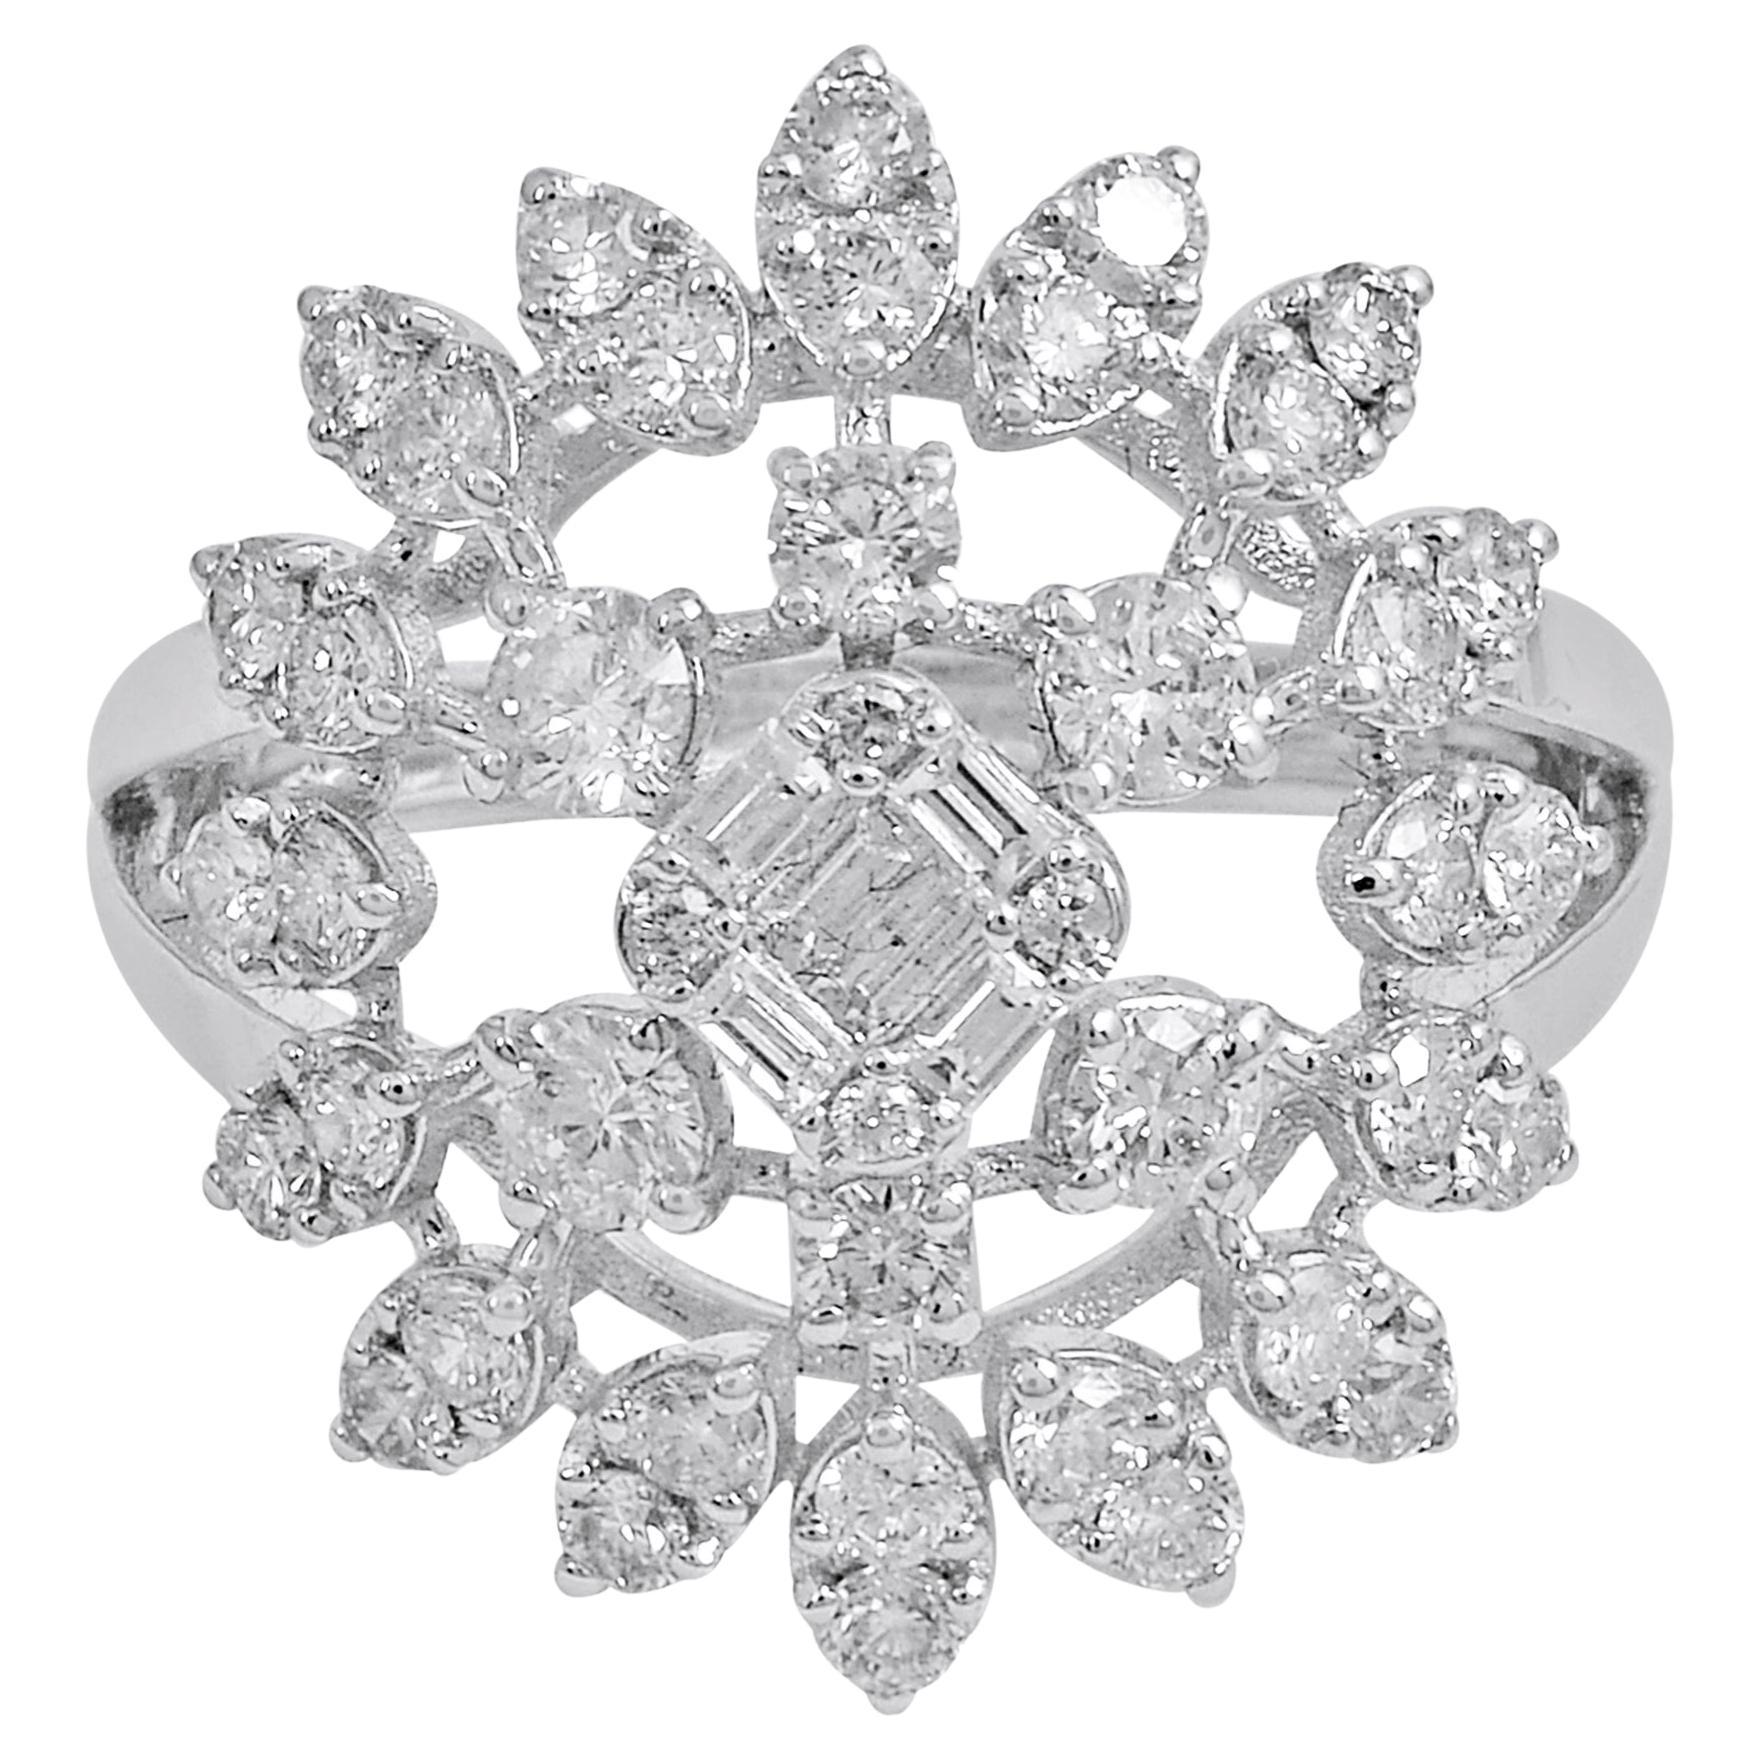 1.70 Carat SI Clarity HI Color Diamond Cocktail Ring 18 Karat White Gold Jewelry